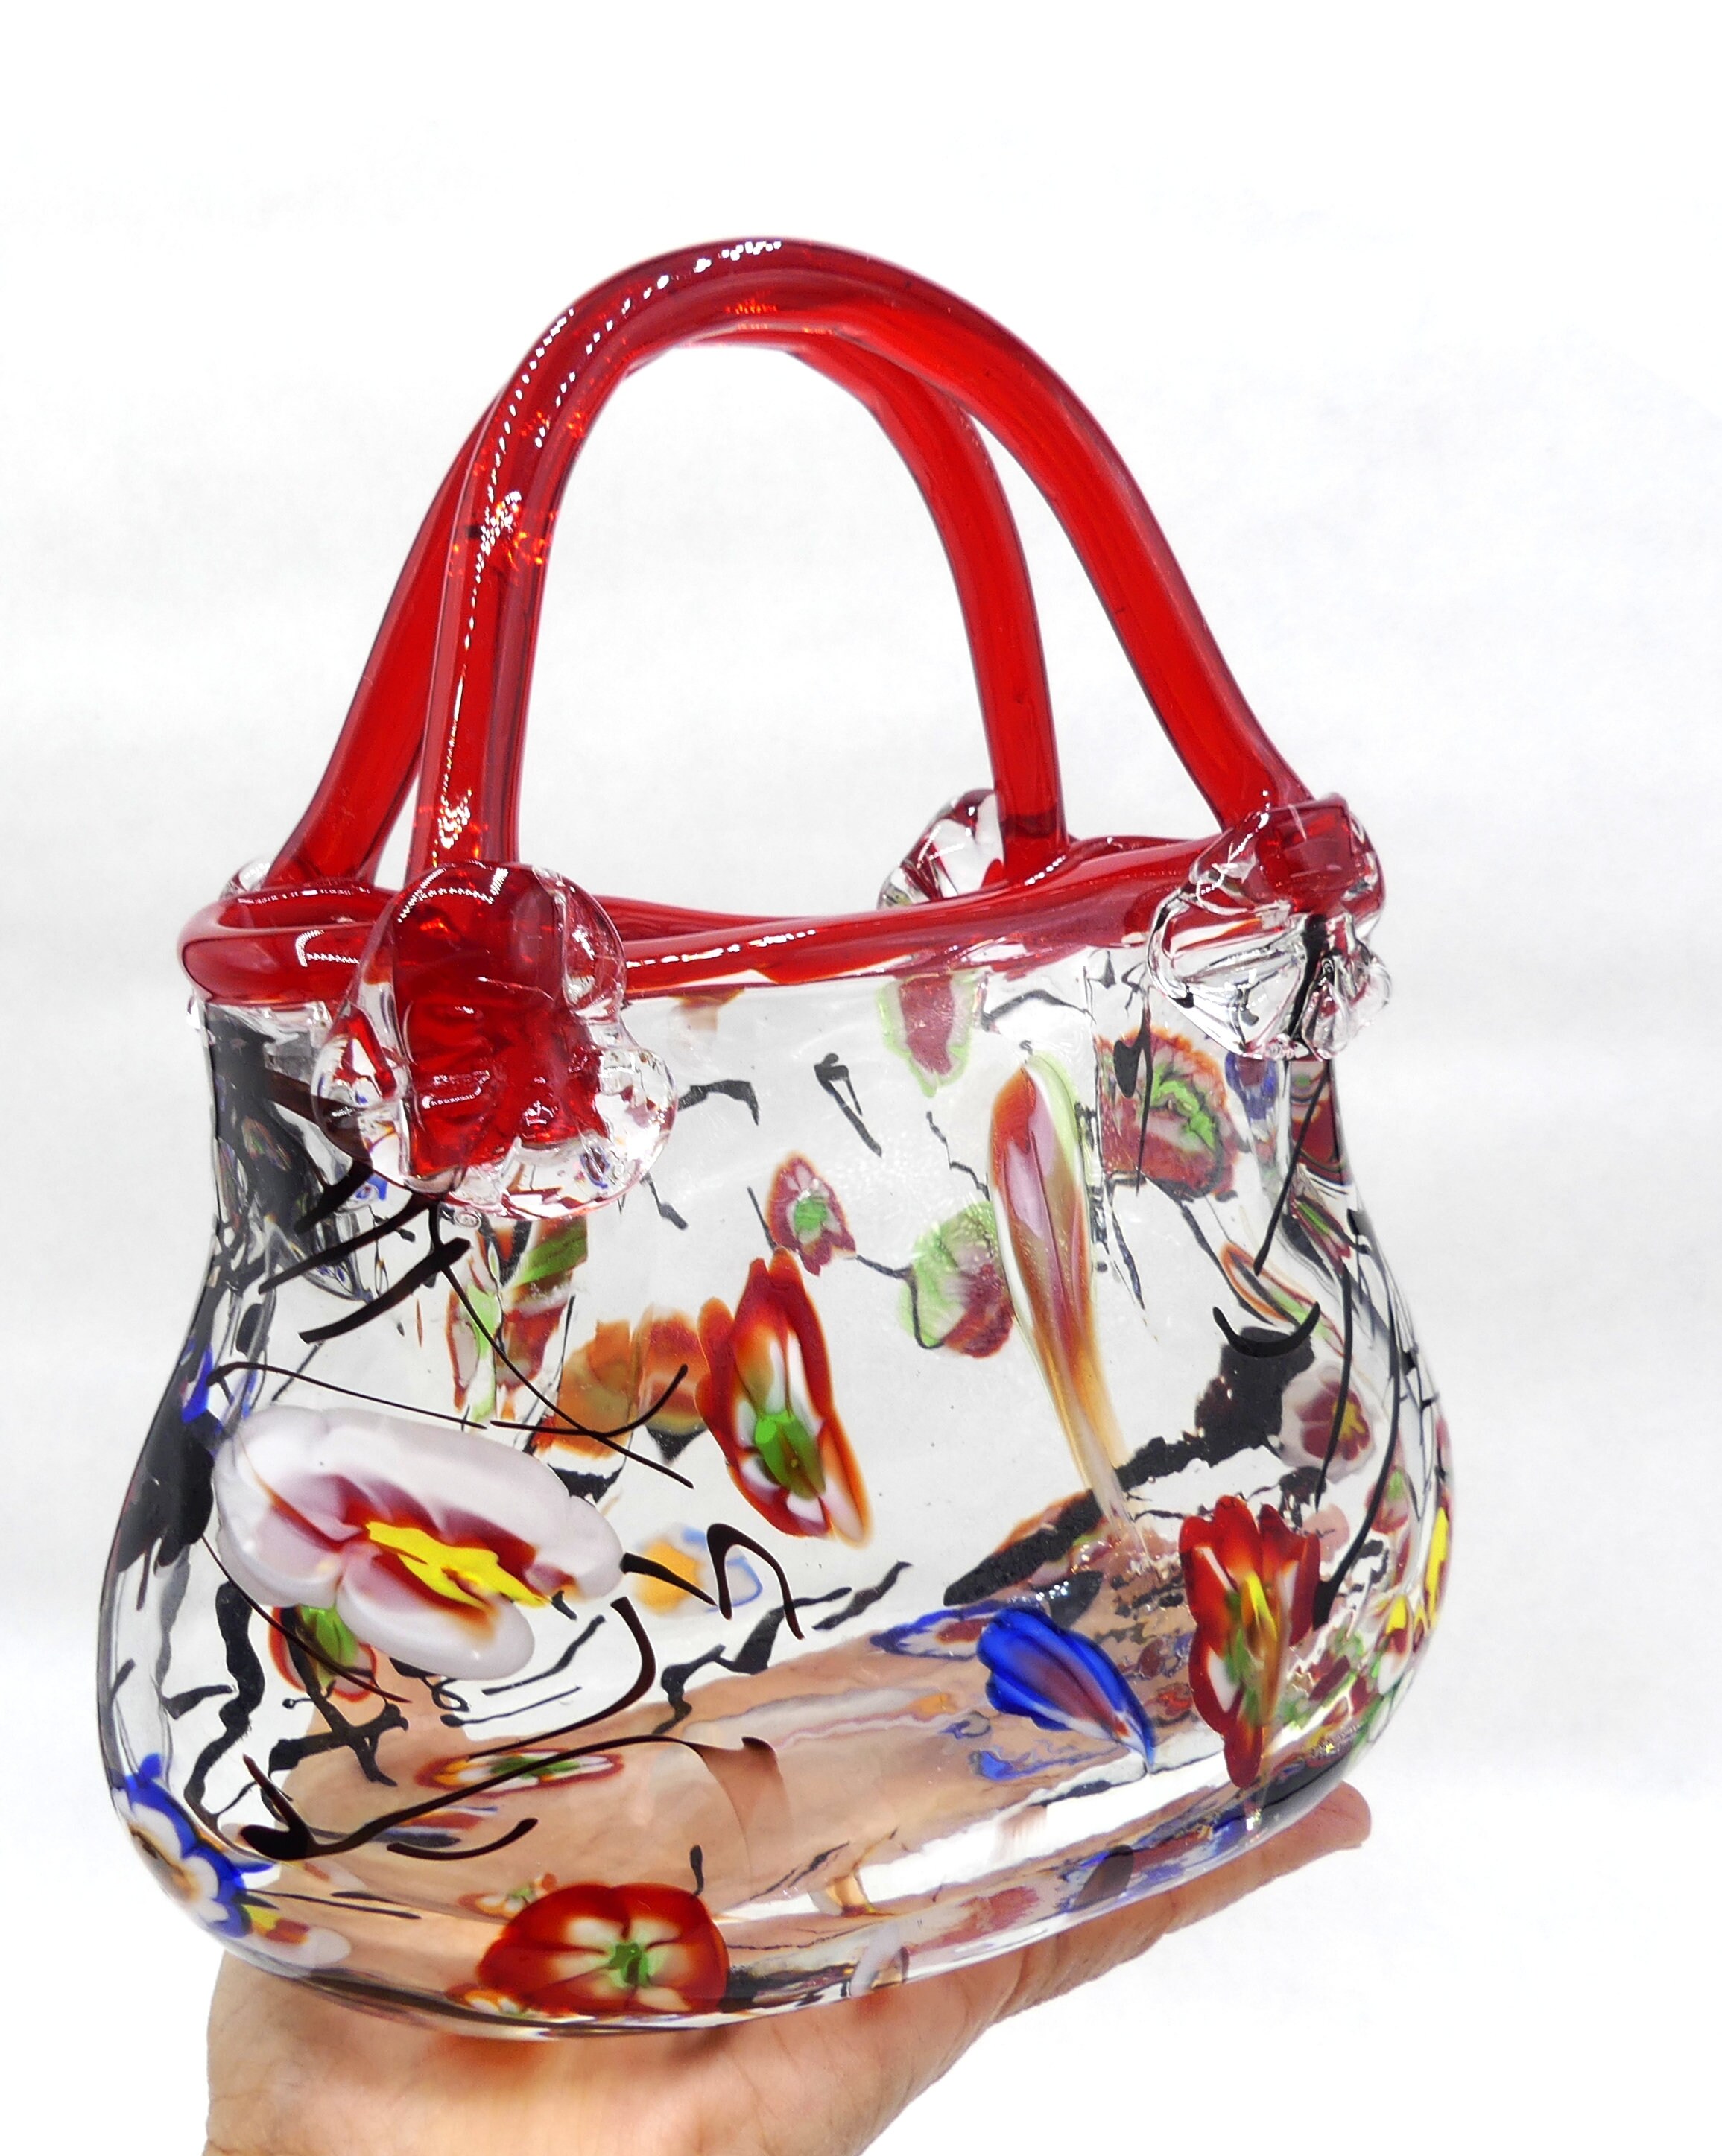 Vintage Italian Millefiori art glass purse | Etsy